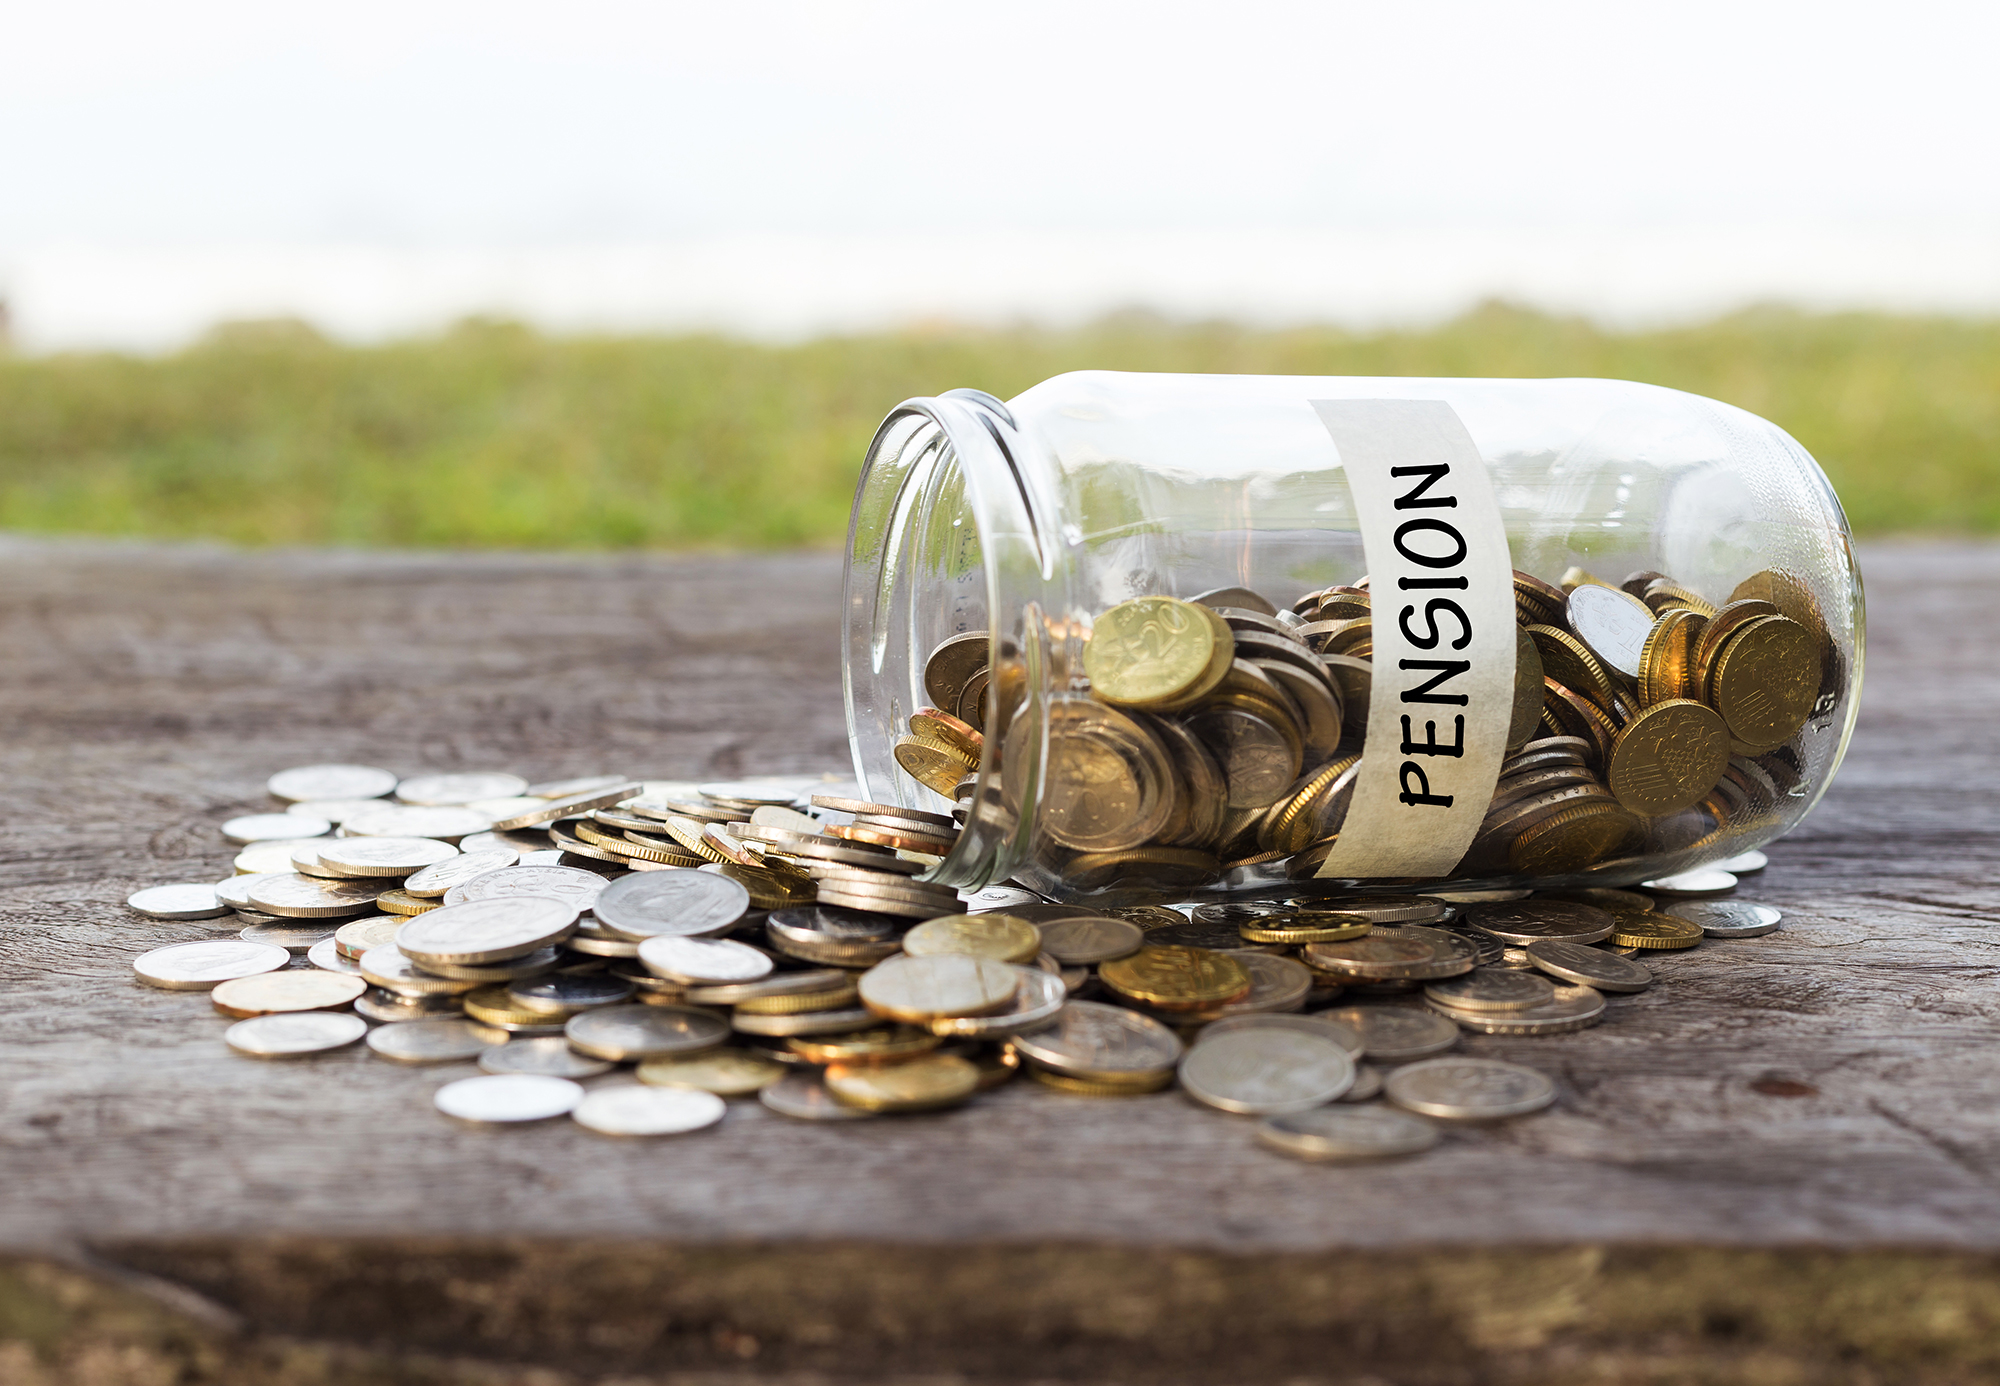 Pot of money fallen over. (Image: Shutterstock)